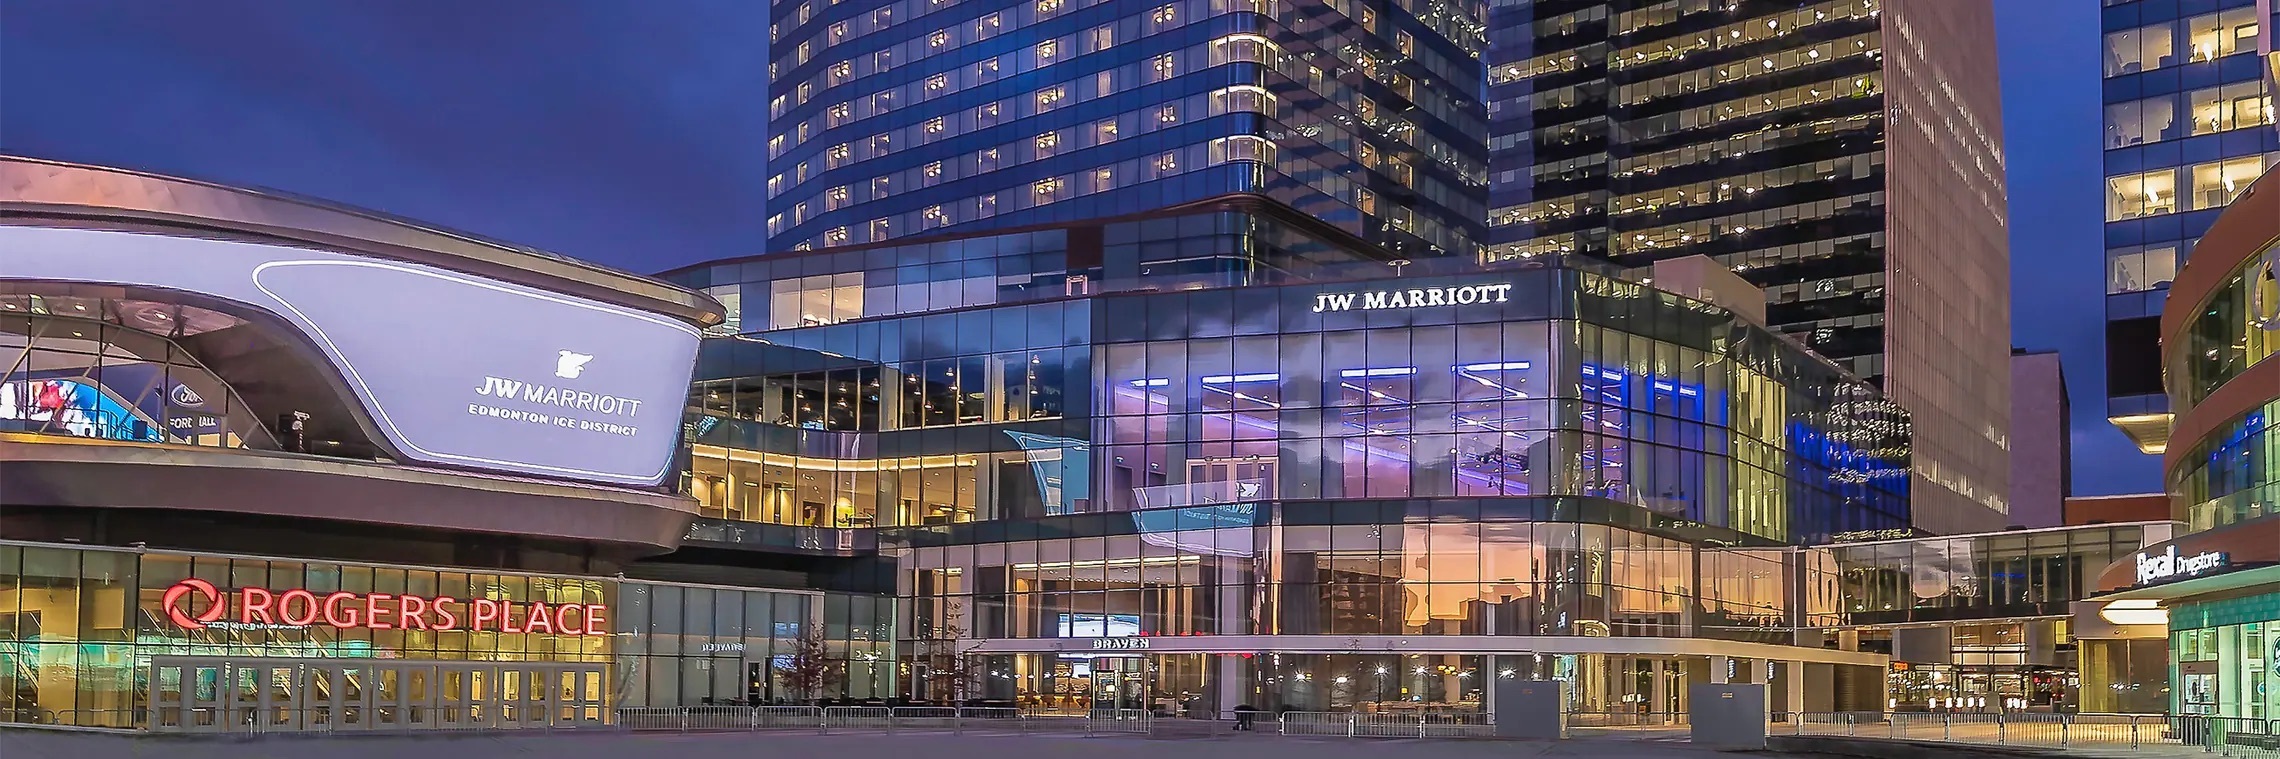 Photo of JW Marriott Edmonton, Edmonton, AB, Canada